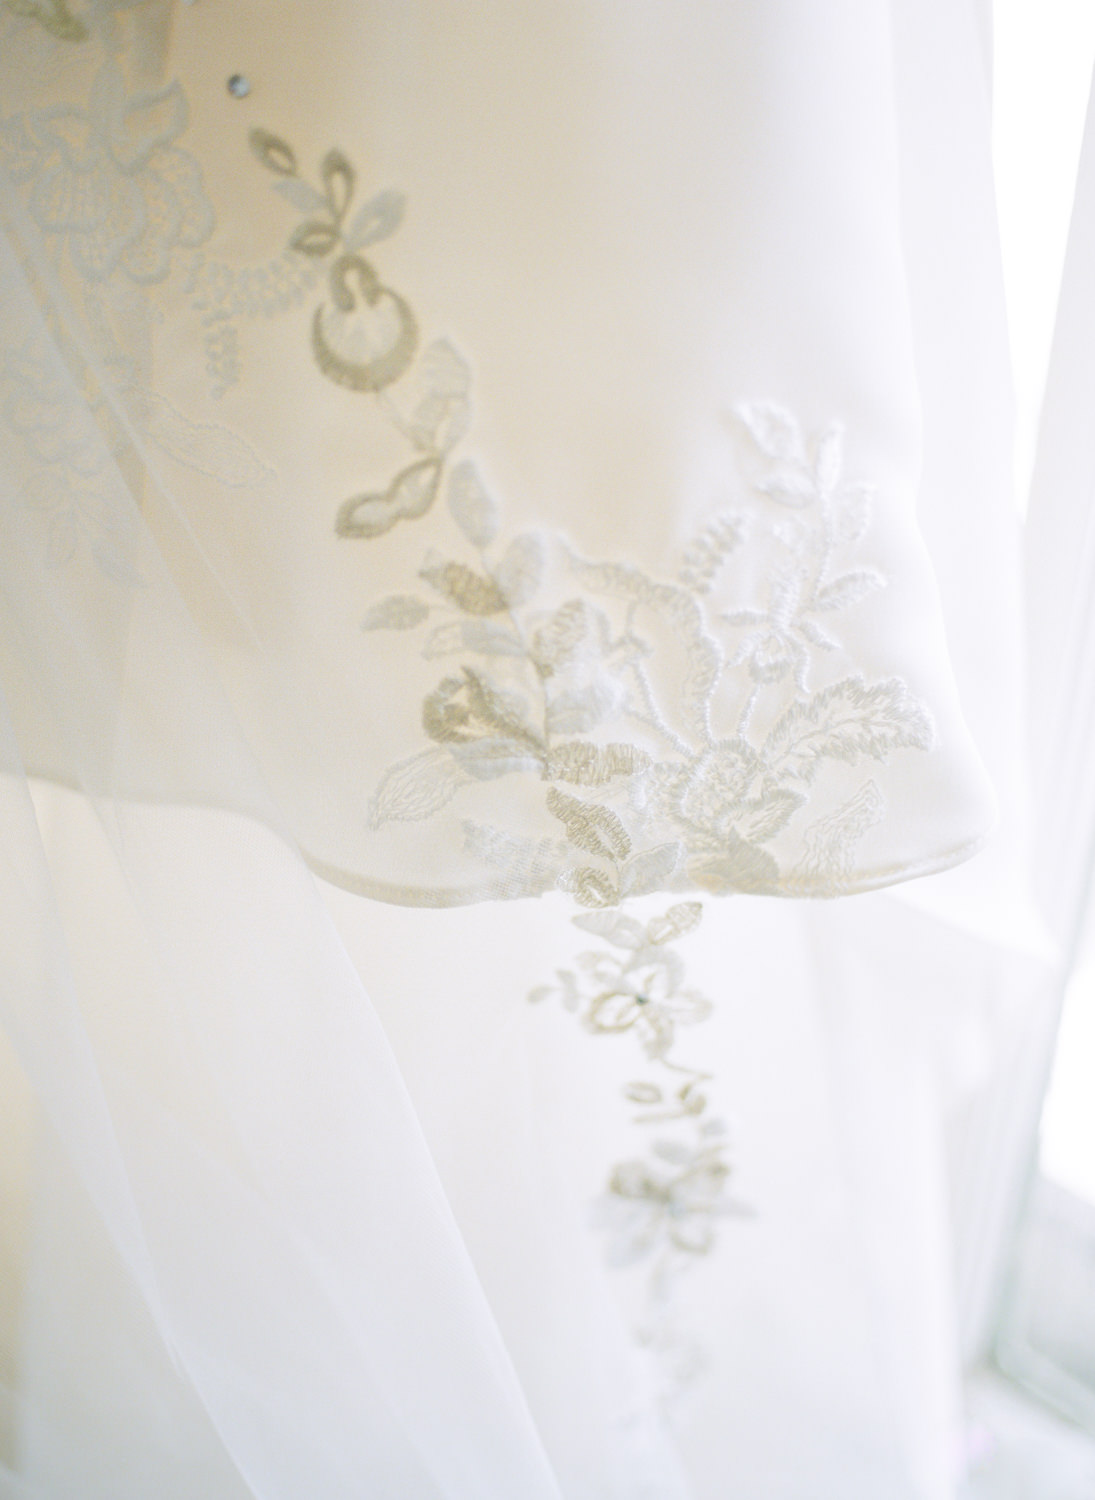 Lace wedding veil detail; St. Louis fine art film wedding photographer Erica Robnett Photography